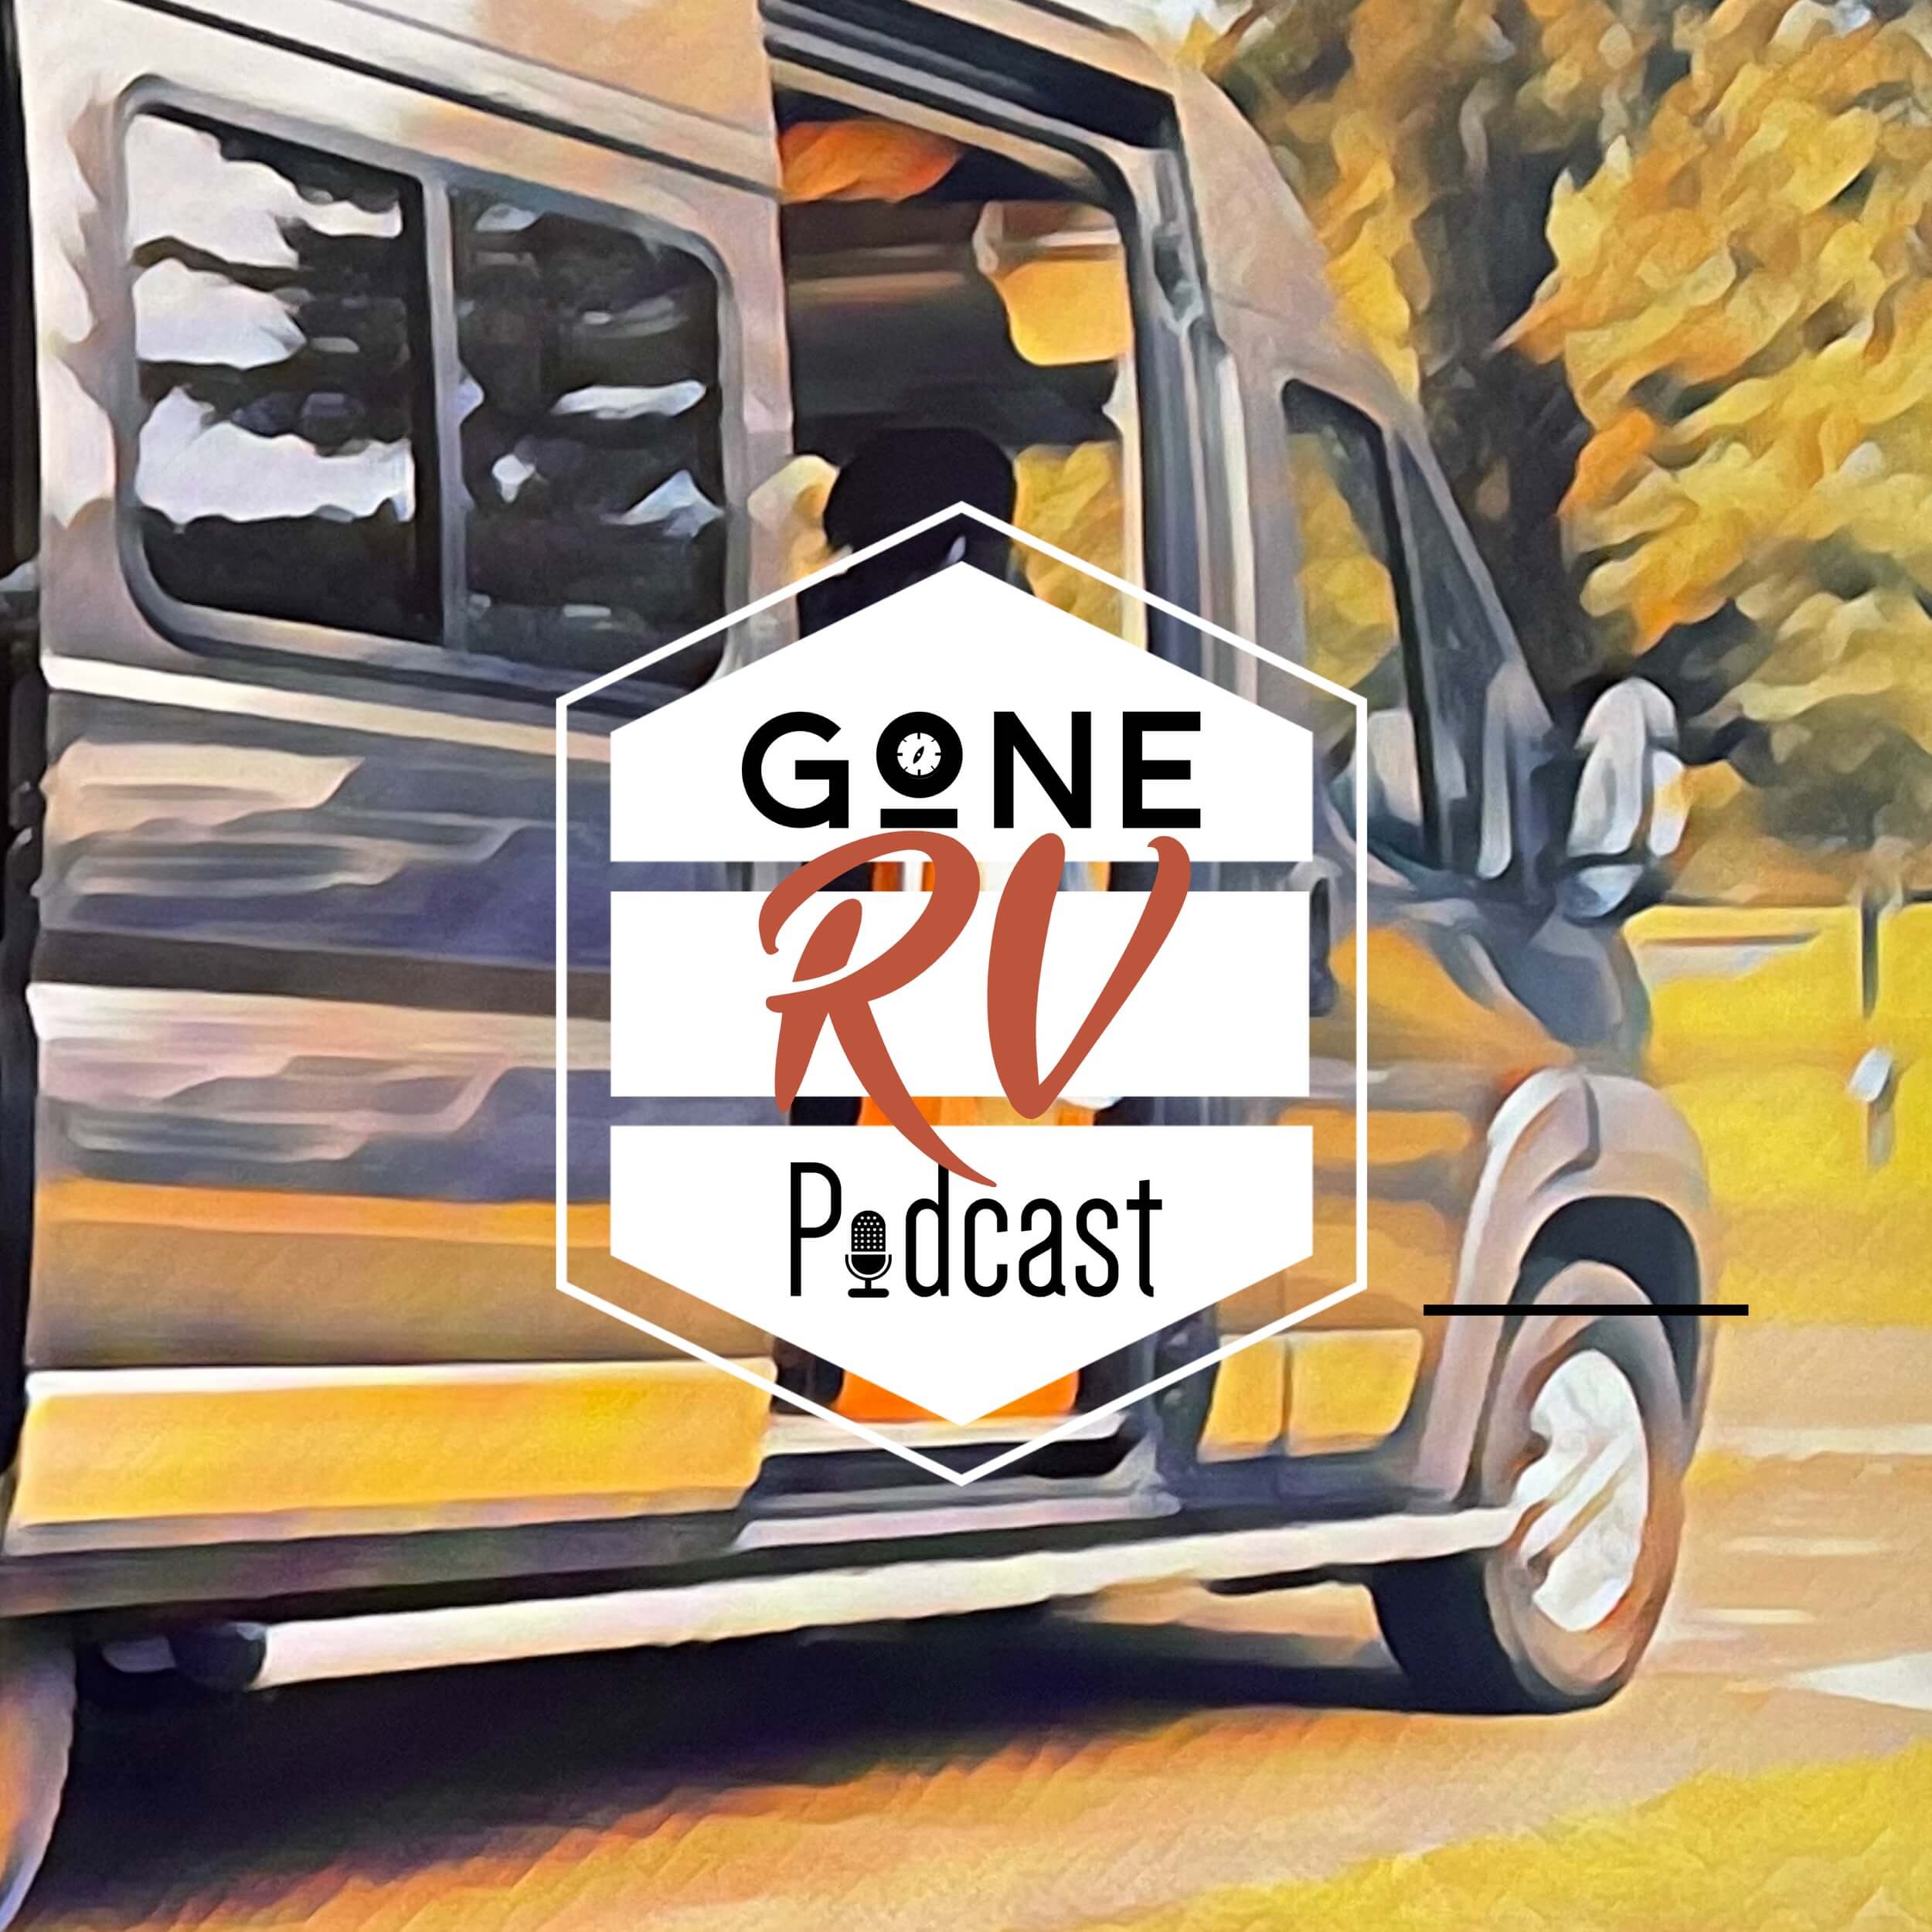 Stylized RV image with "Gone RV Podcast" logo